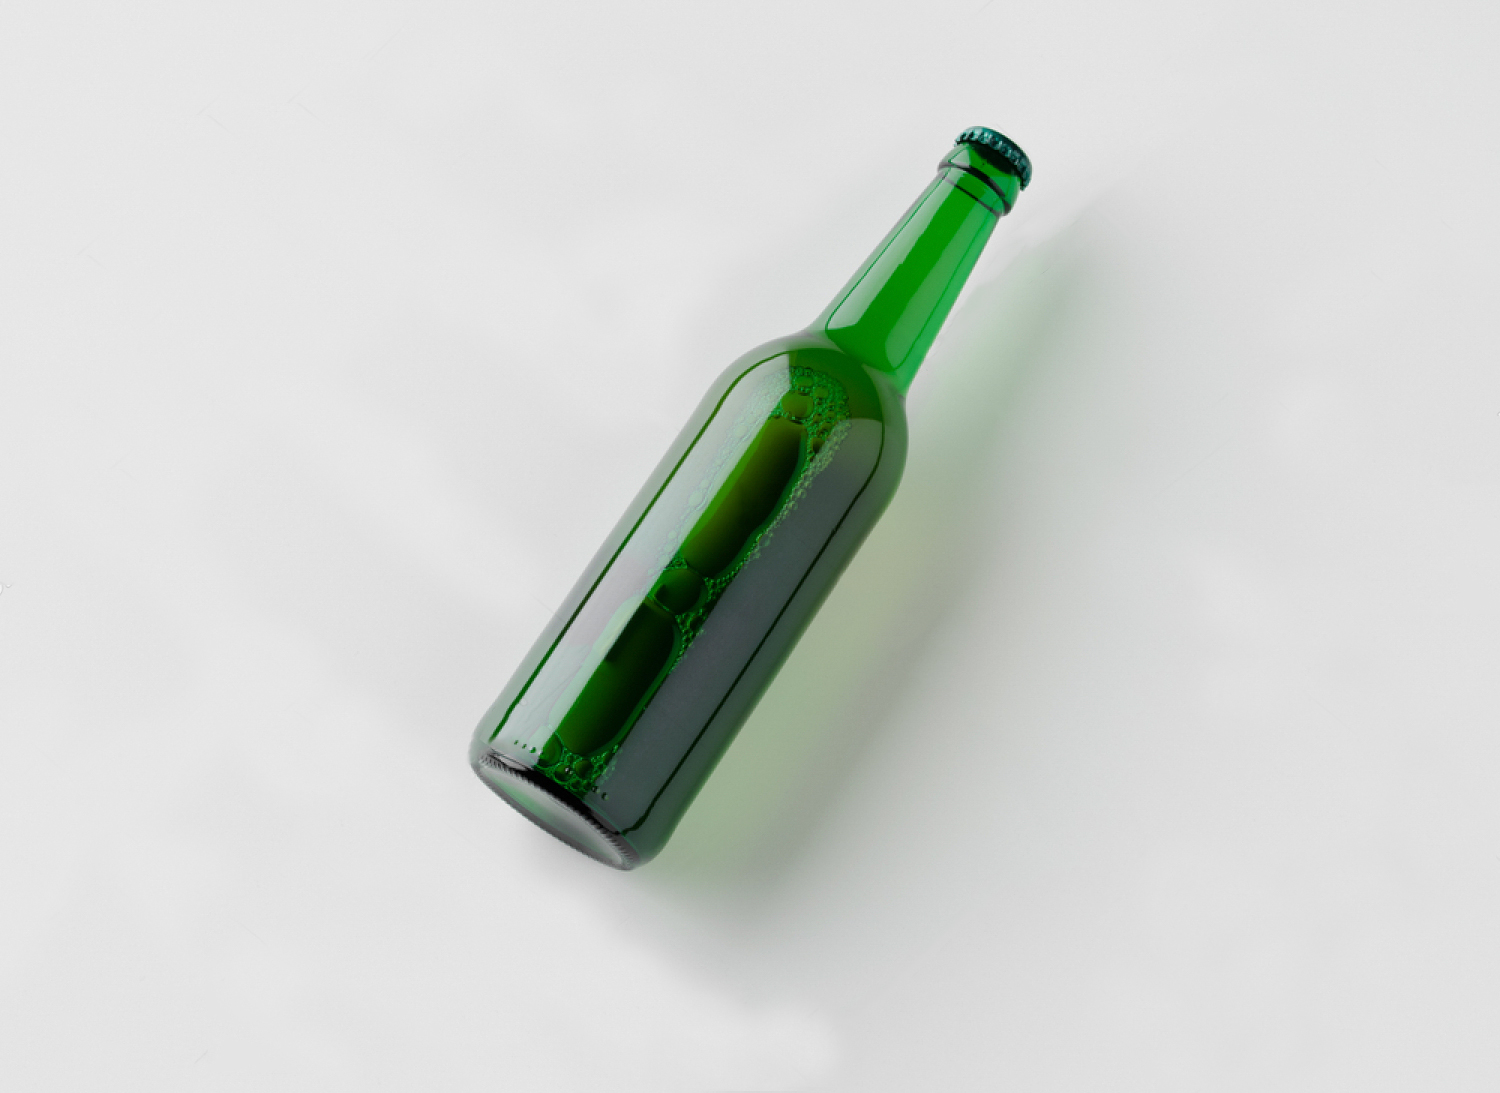 Dark Green Beer glass bottle liquor 330ml 550ml 750ml Beer Bottle Botol Gelas Bir Garrafa De Vidro De Cerveja Bira Sisesi